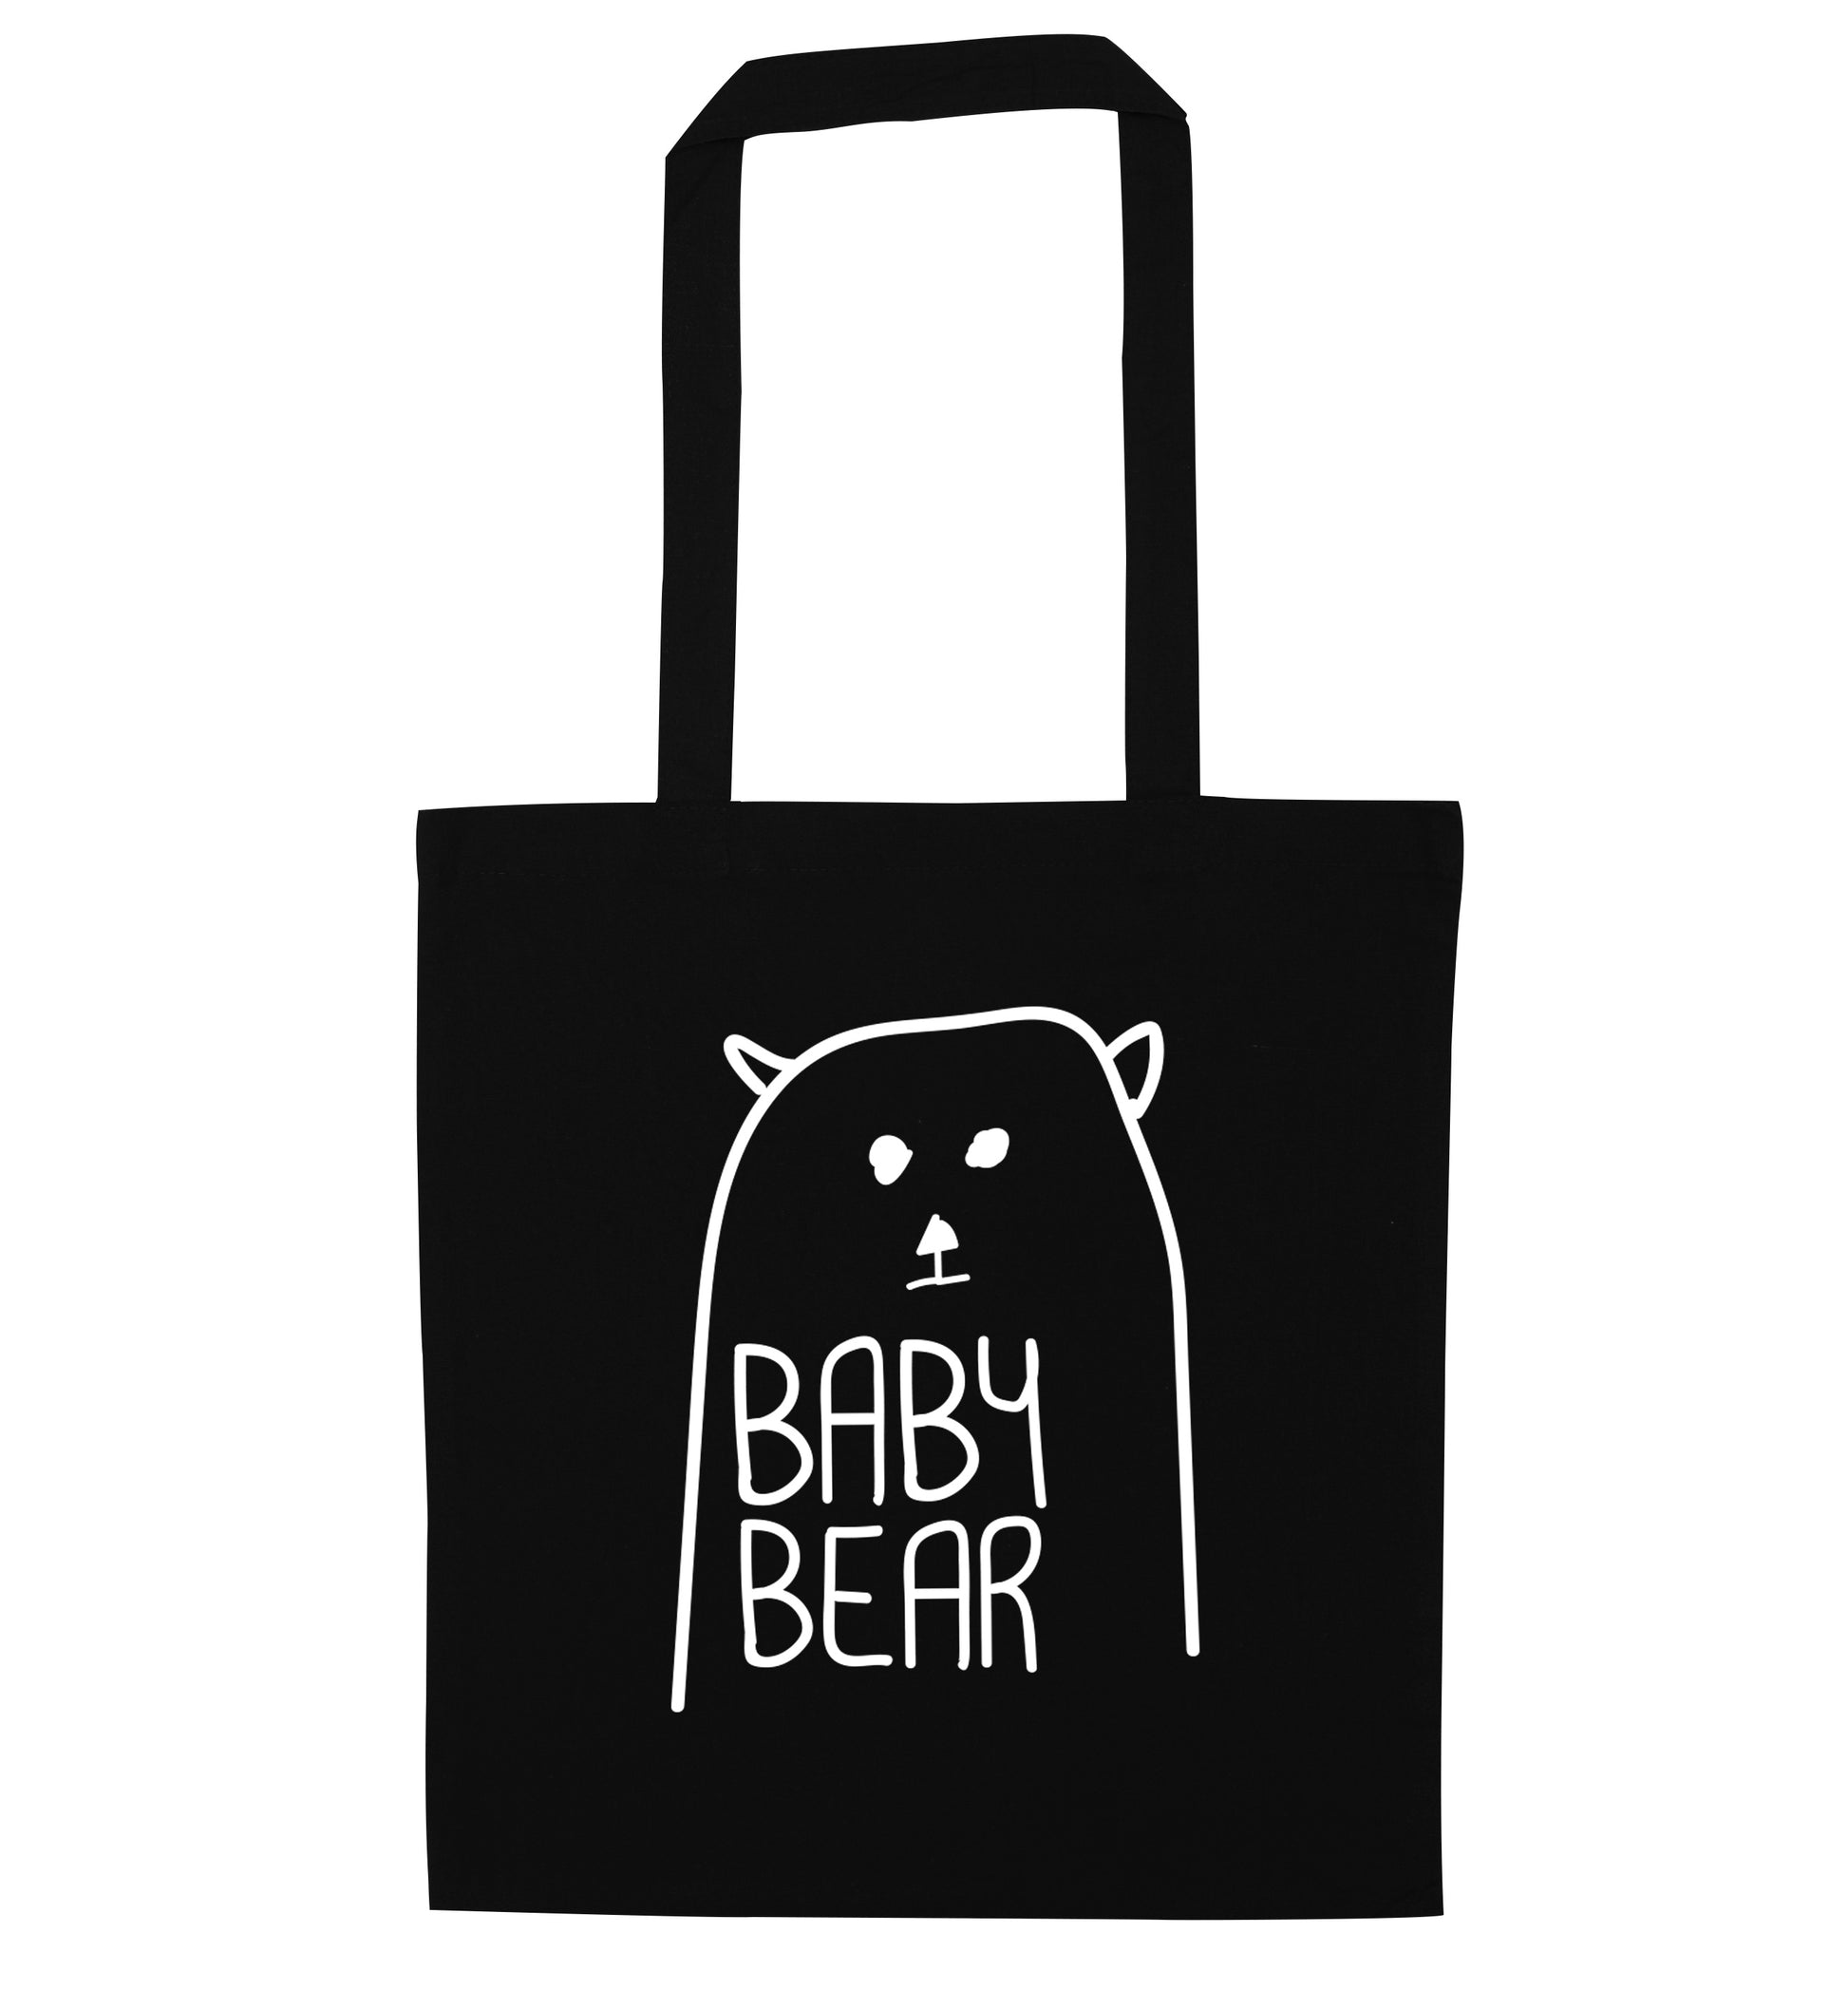 Baby bear black tote bag